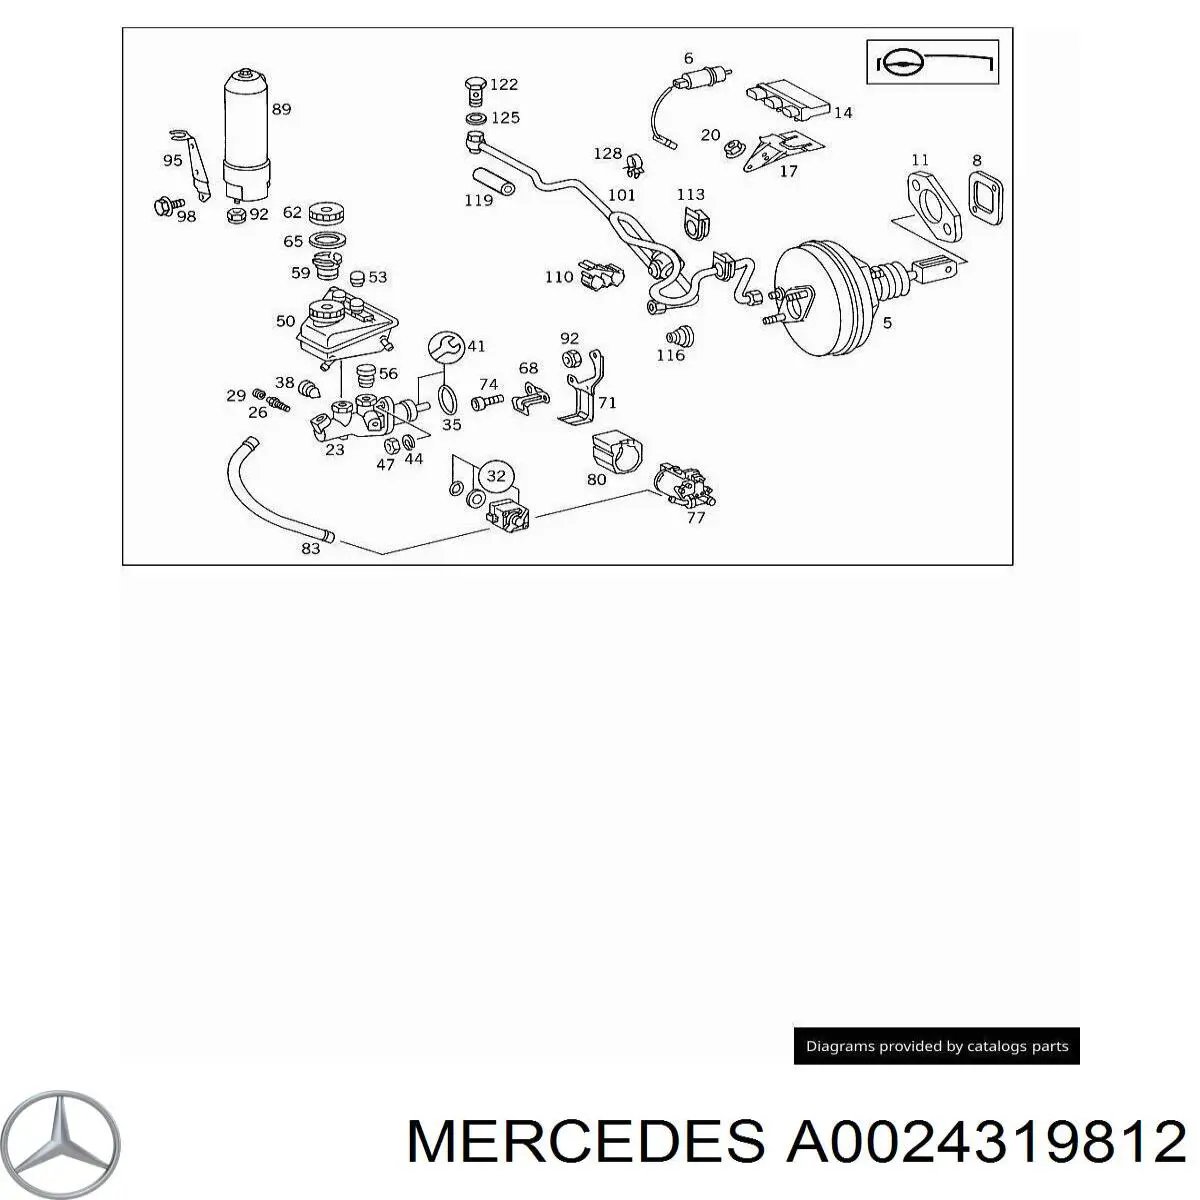 A0024319812 Mercedes блок управления абс (abs гидравлический)